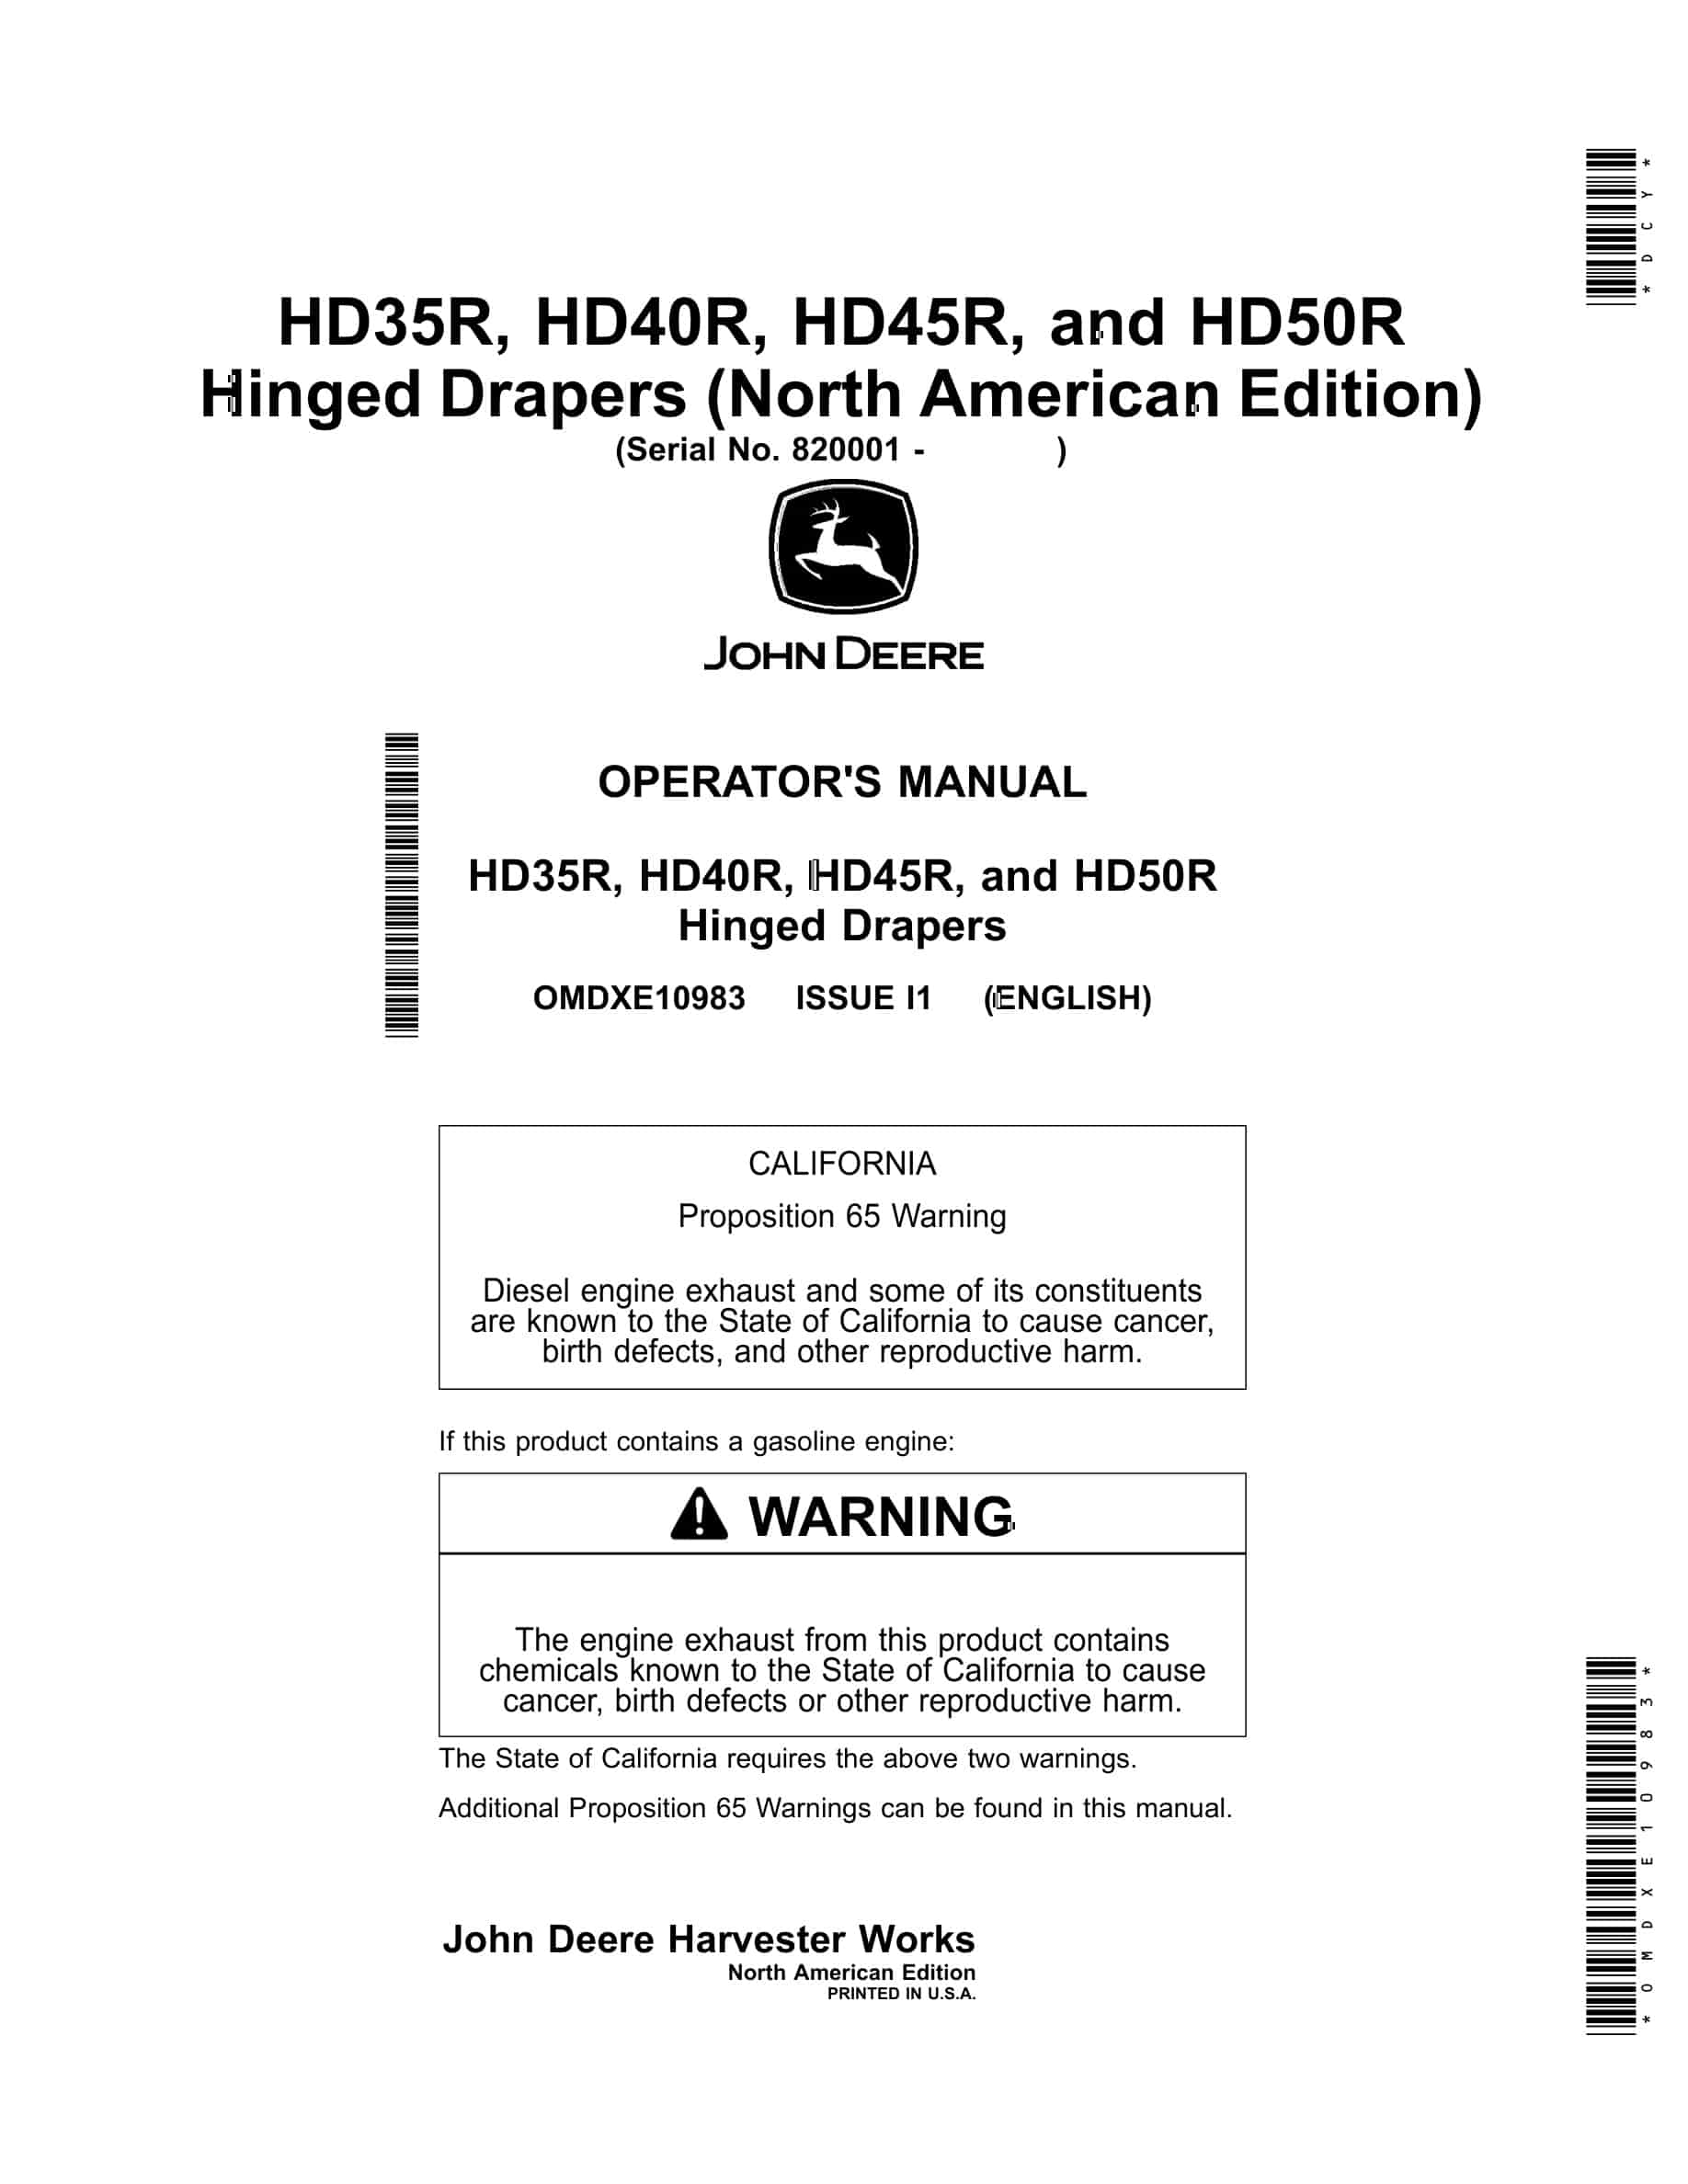 John Deere HD35R, HD40R, HD45R, and HD50R Hinged Drapers Operator Manual OMDXE10983-1